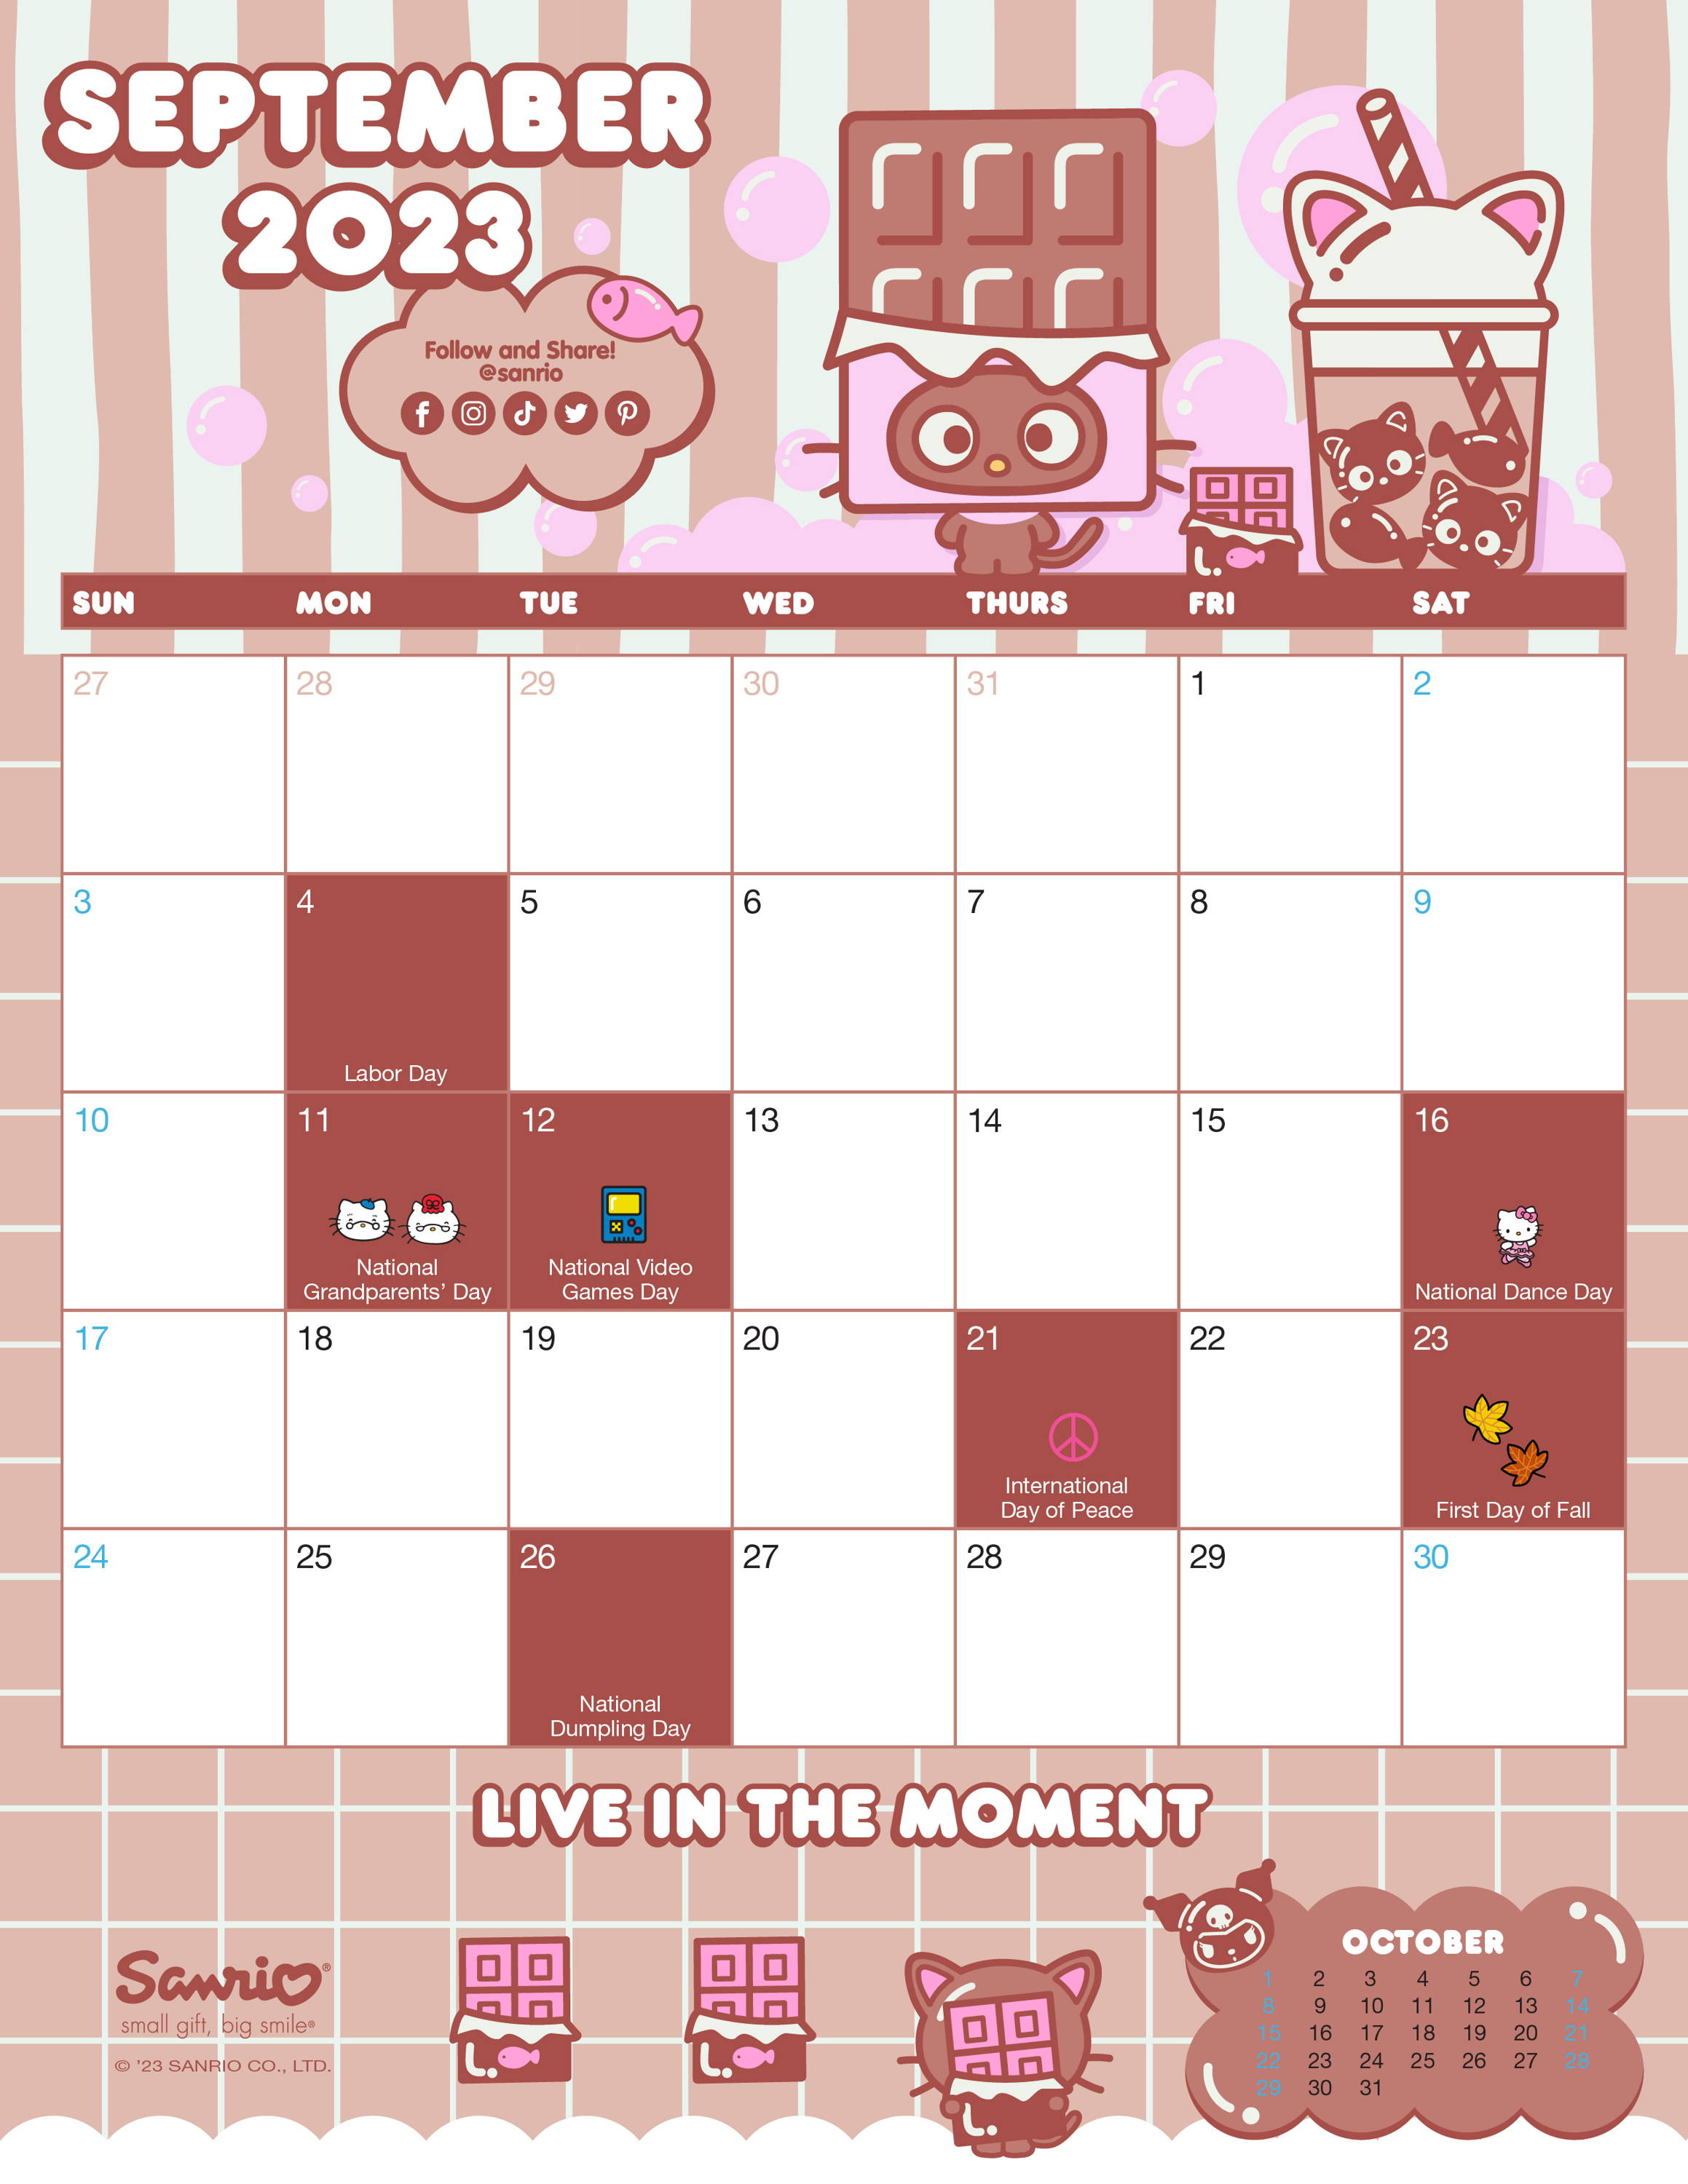 Sanrio Friend of the Month September 2023  Calendar featuring Chococat.